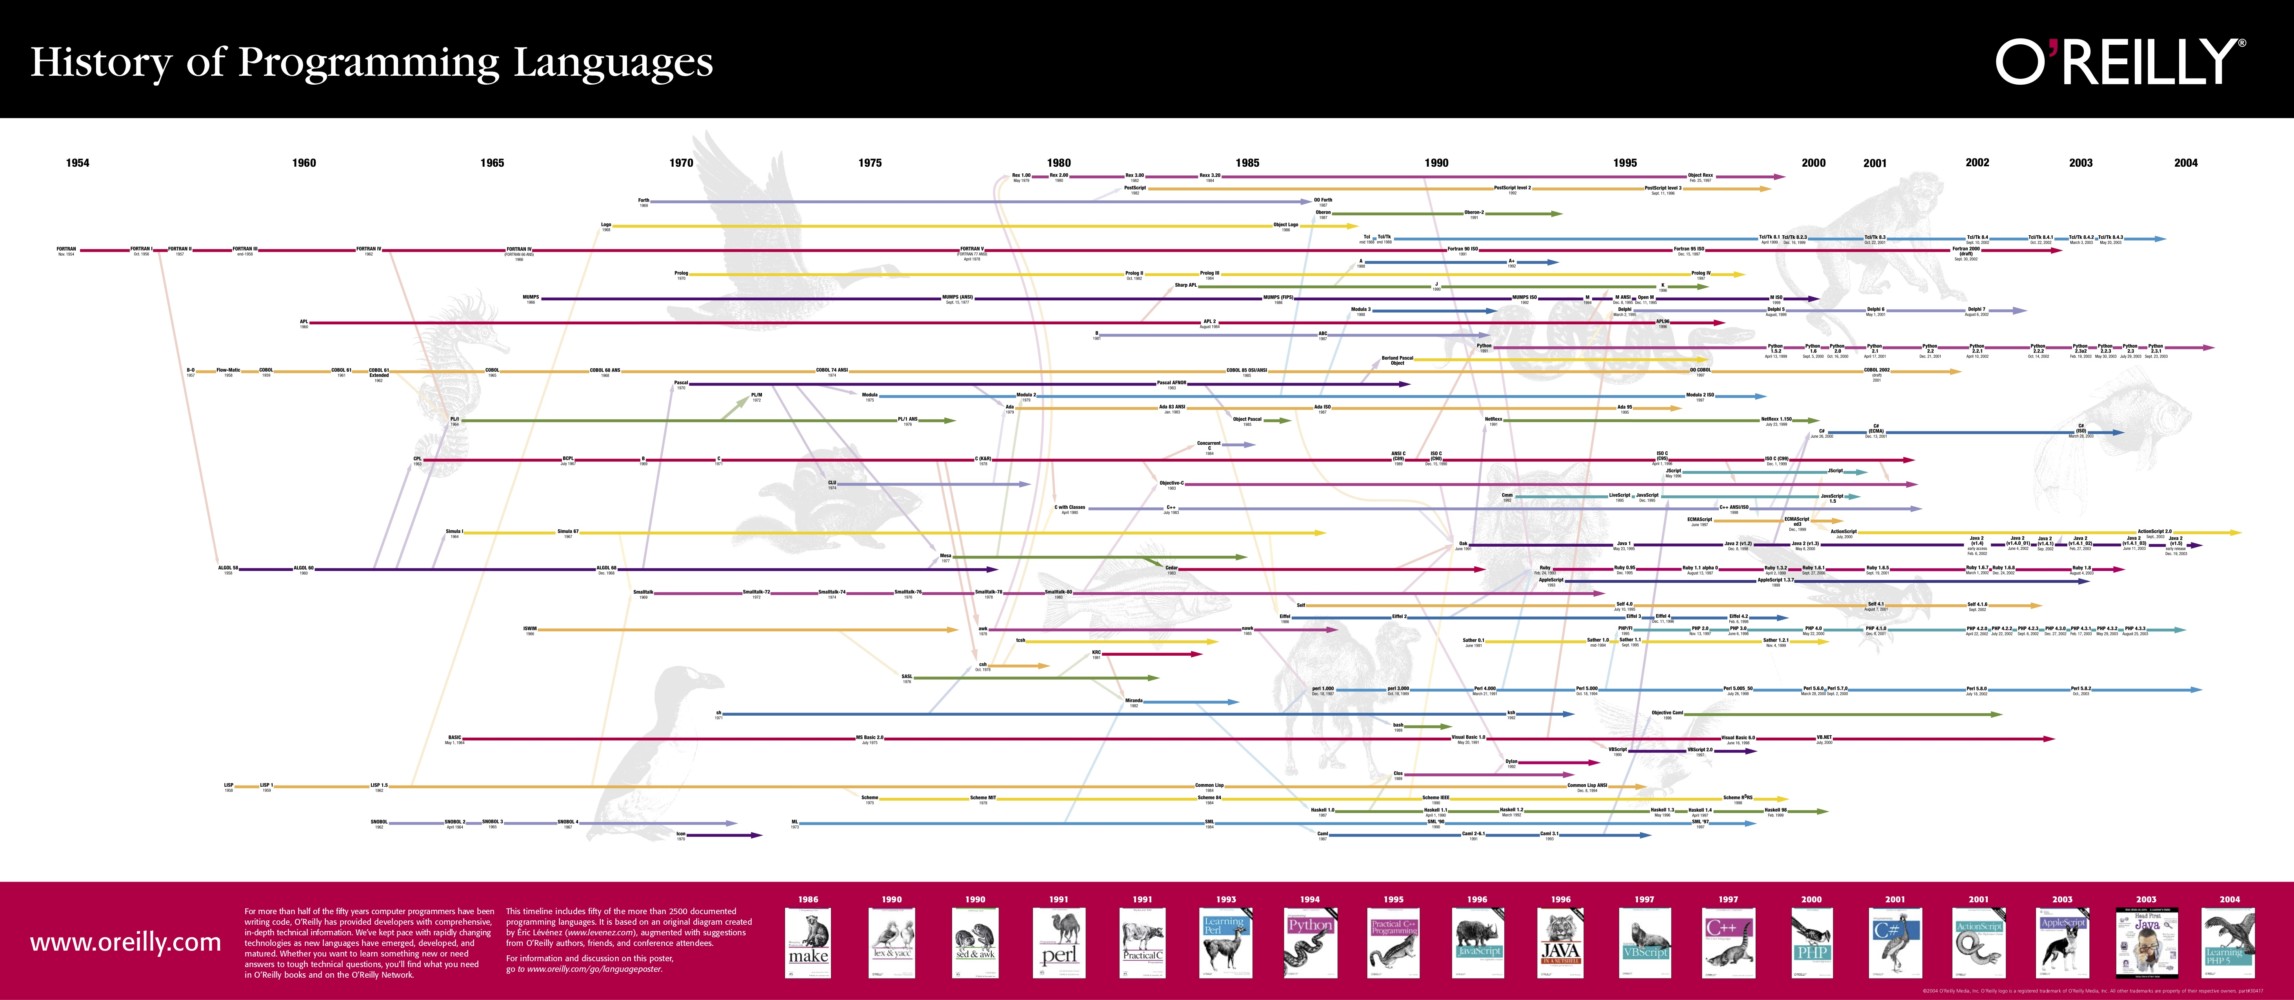 Timeline of programming languages